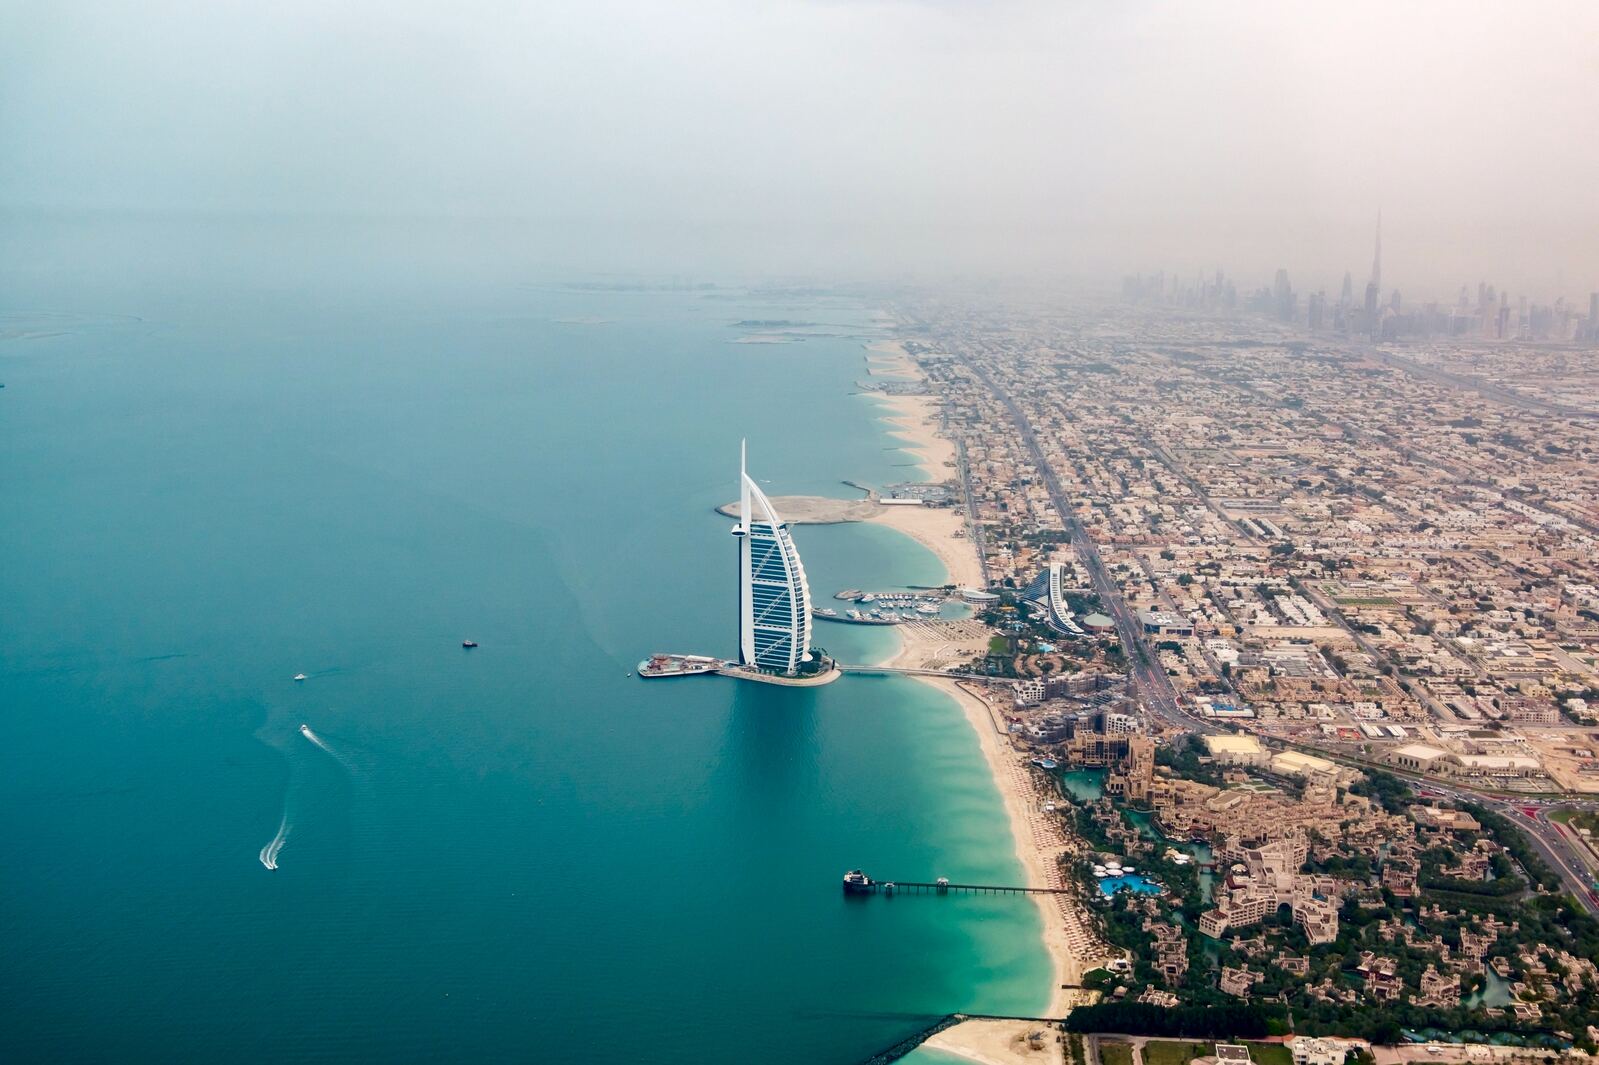 Image of Dubai Helicopter Tour by Team PhotoHound